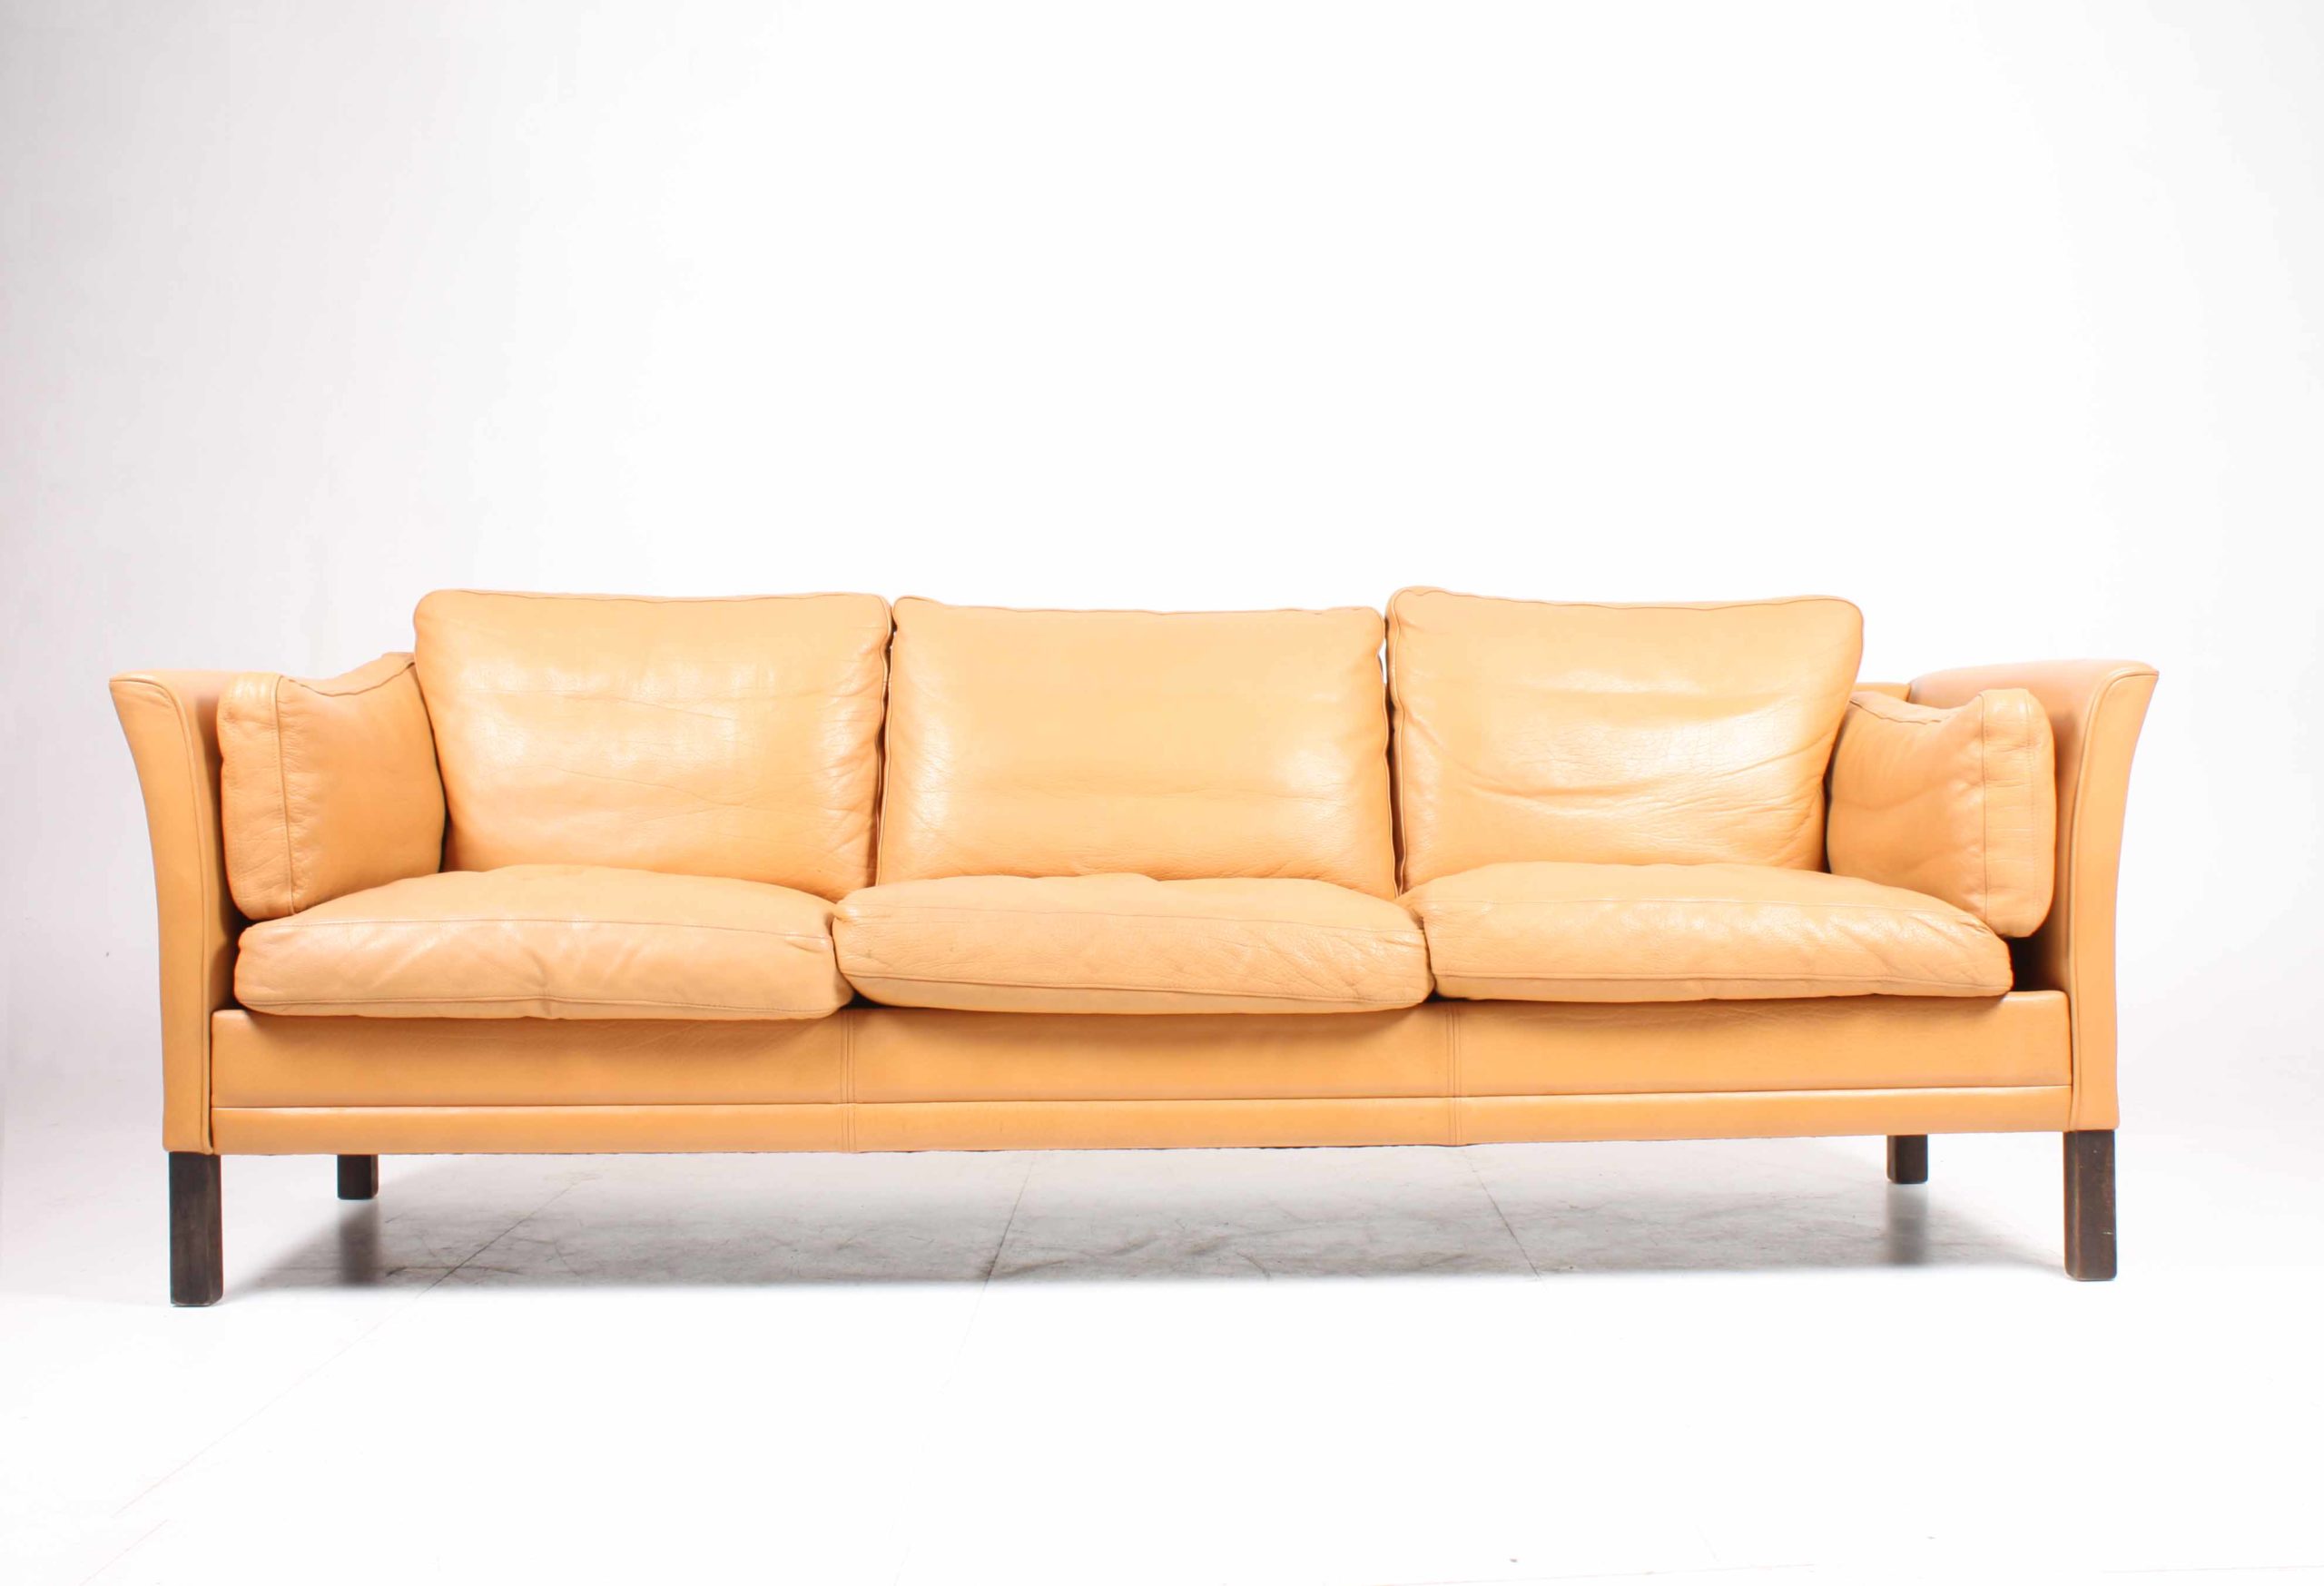 softline danish leather trellis sofa